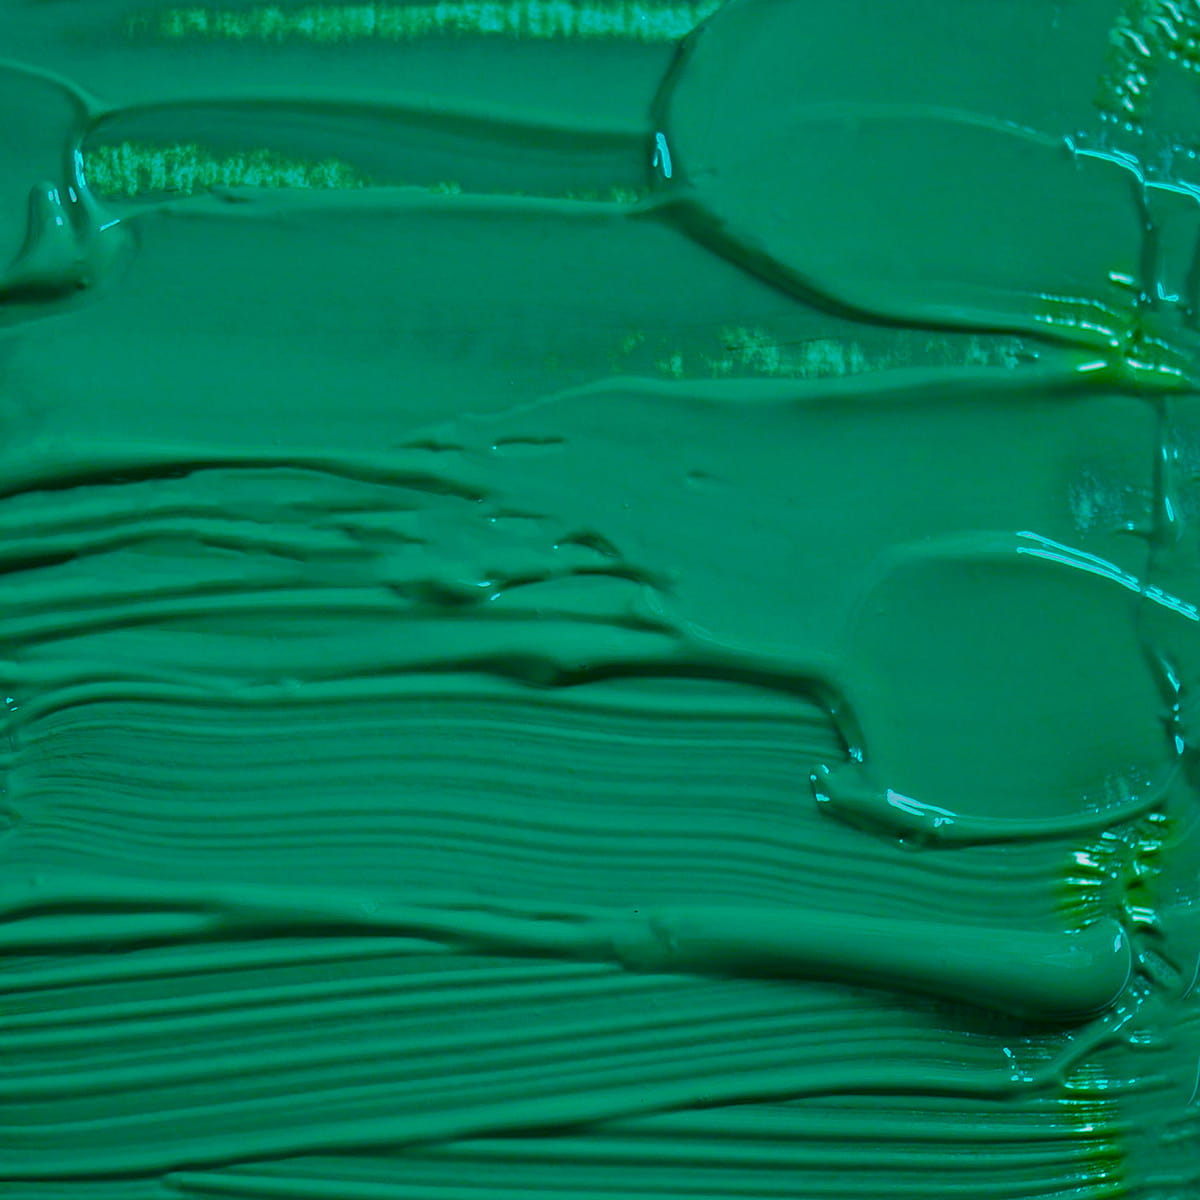 Farba akrylowa EMERALD GREEN Art Acrylic 75 ml Schjerning 5326 